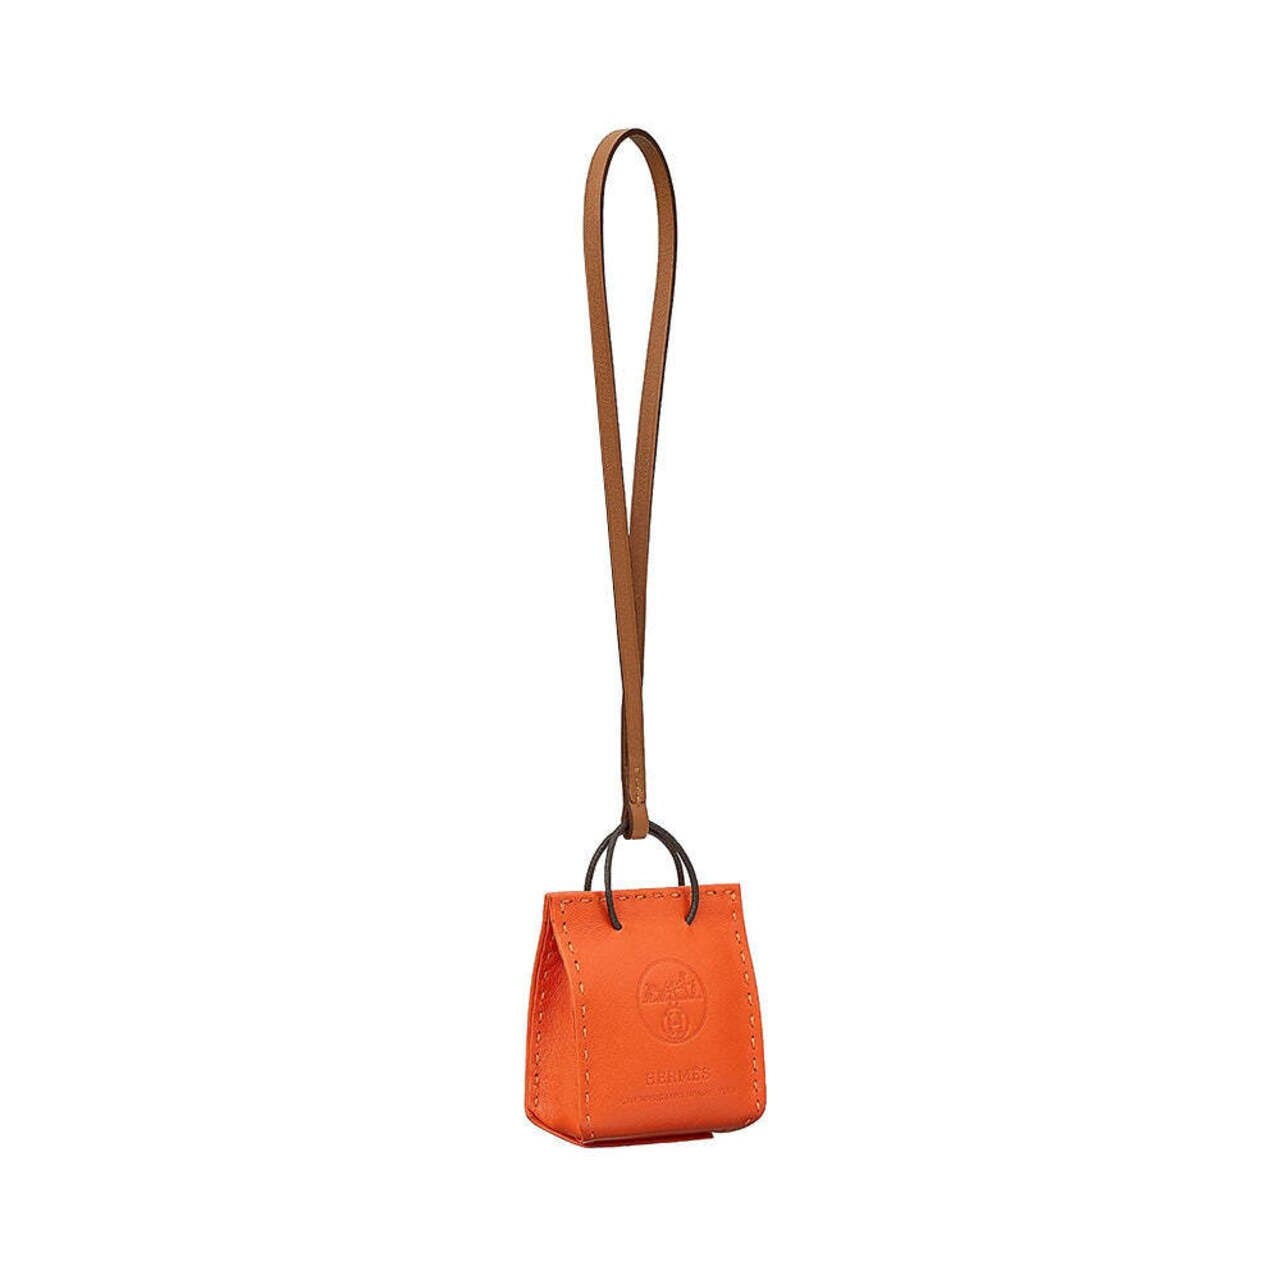 Hermes Orange Bag Charm Feu Gold